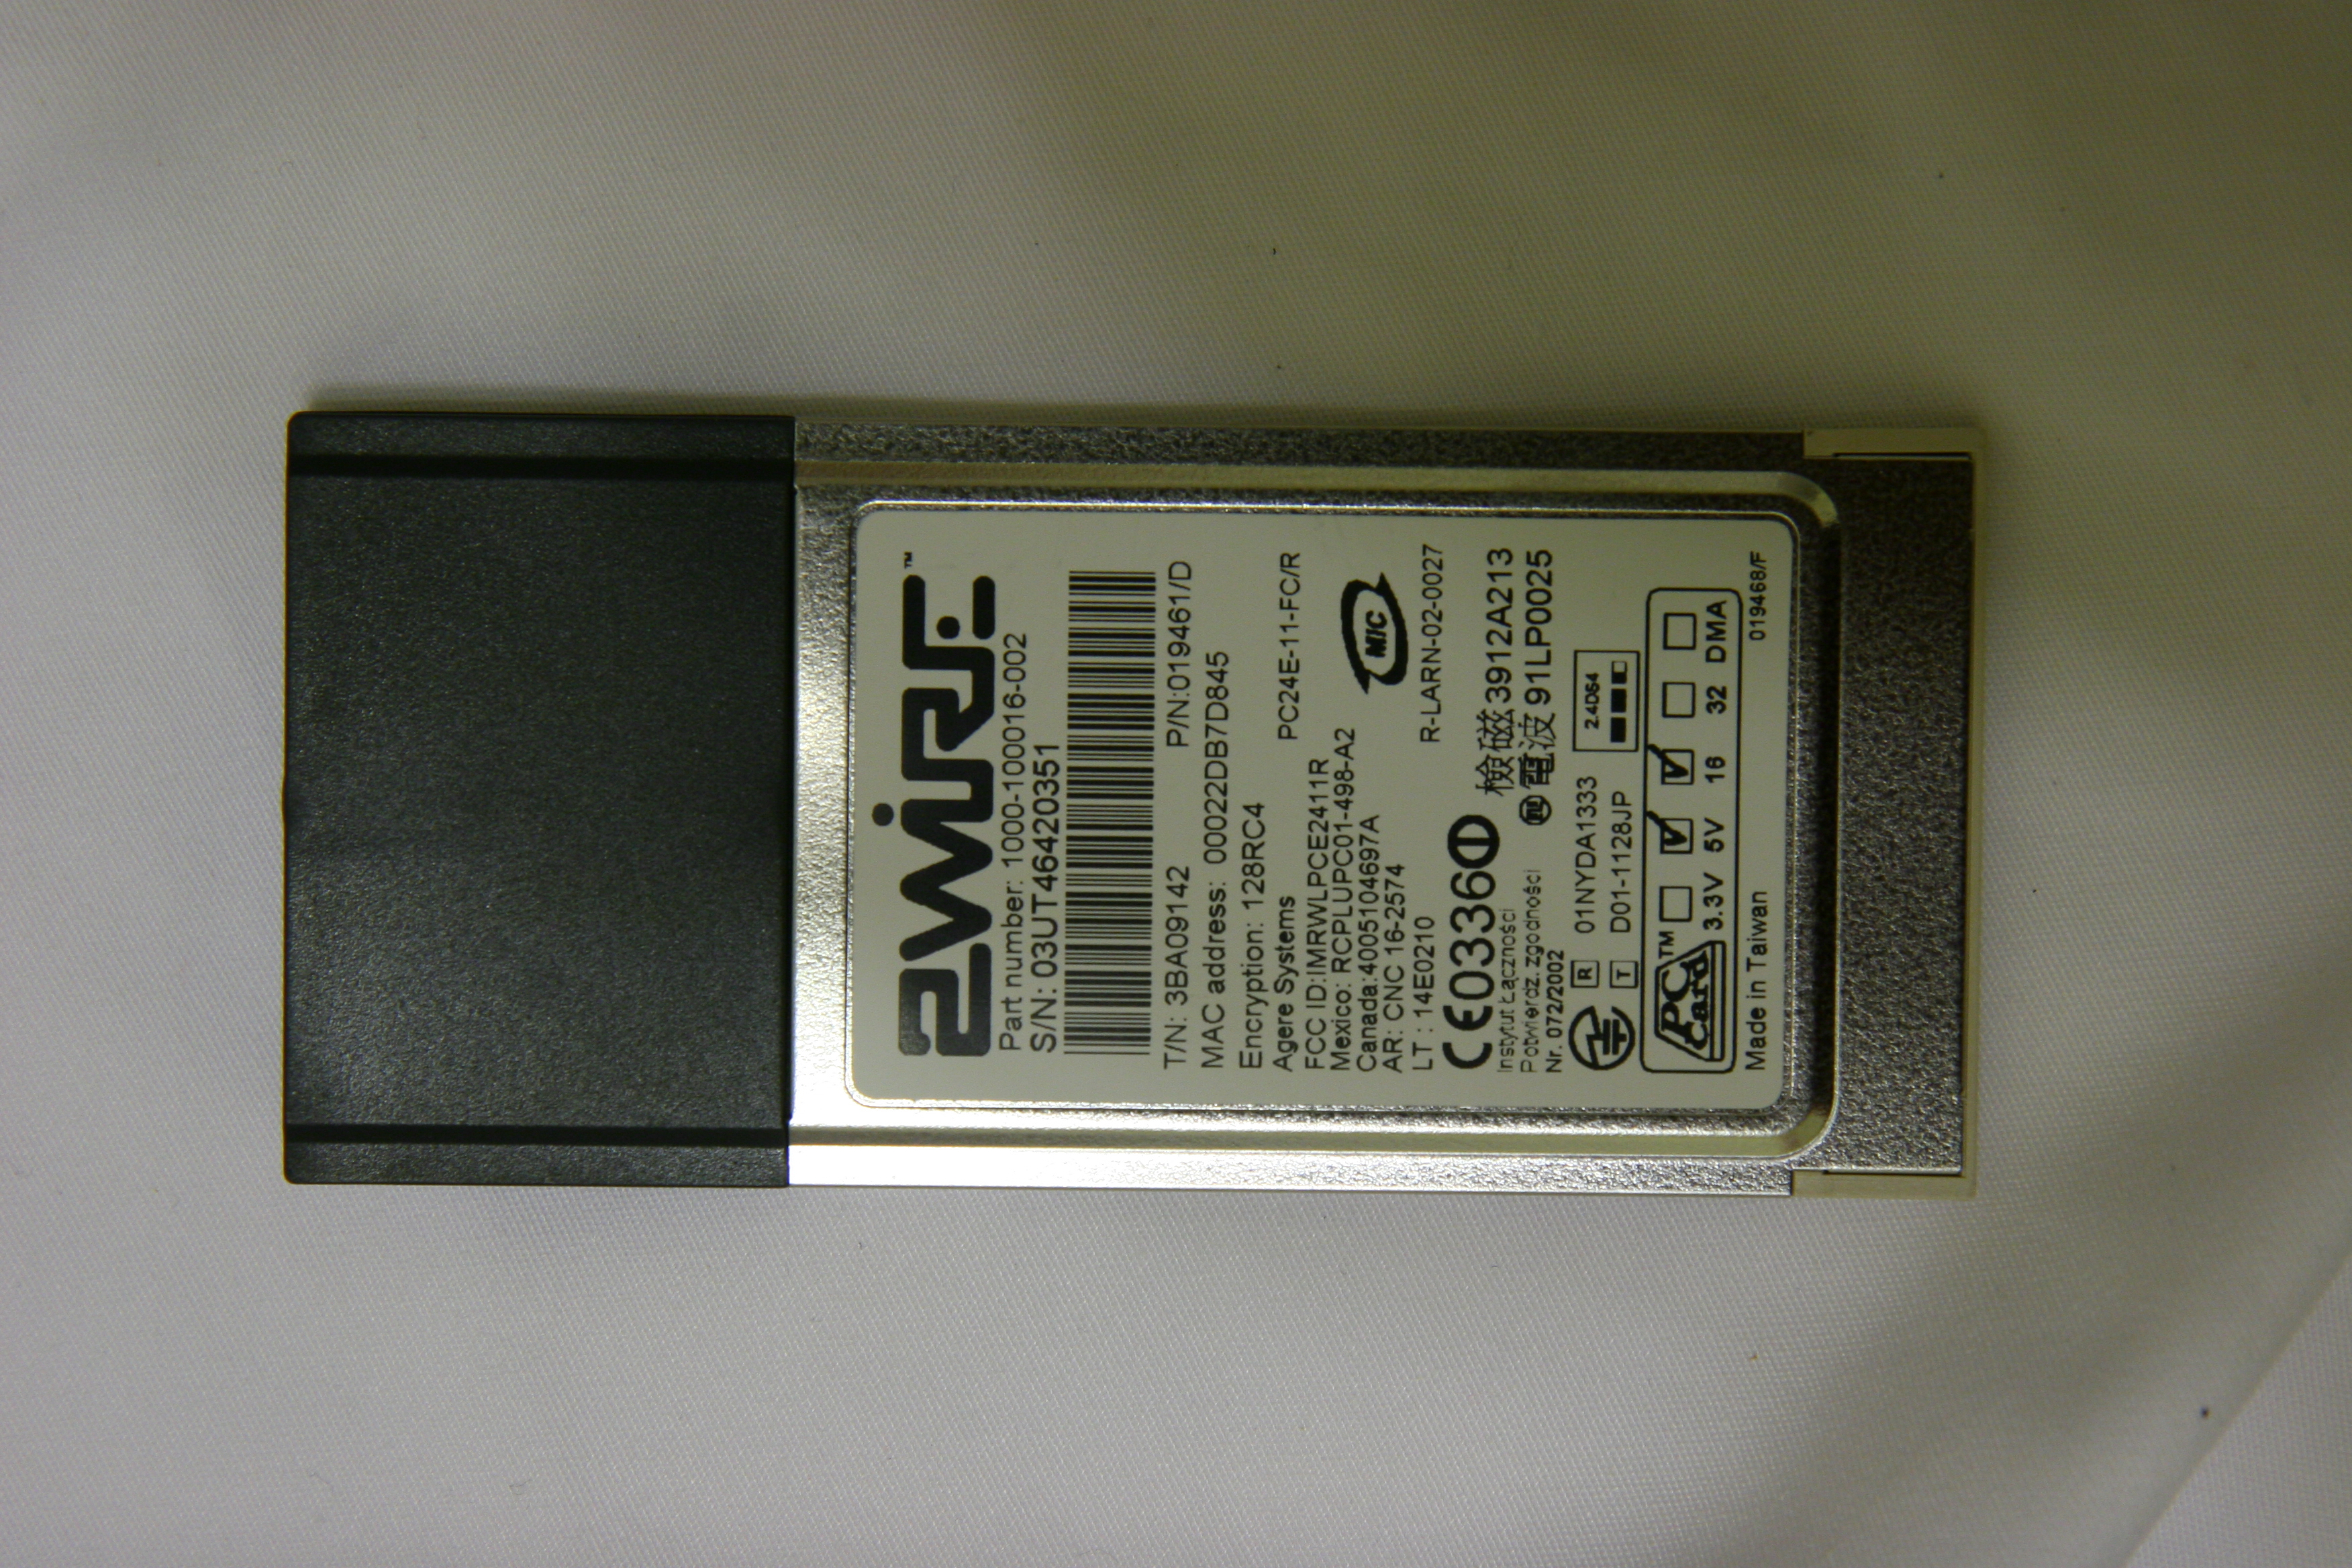 2Wire 802.11b Cardbus/PCMCIA Wireless Adapter